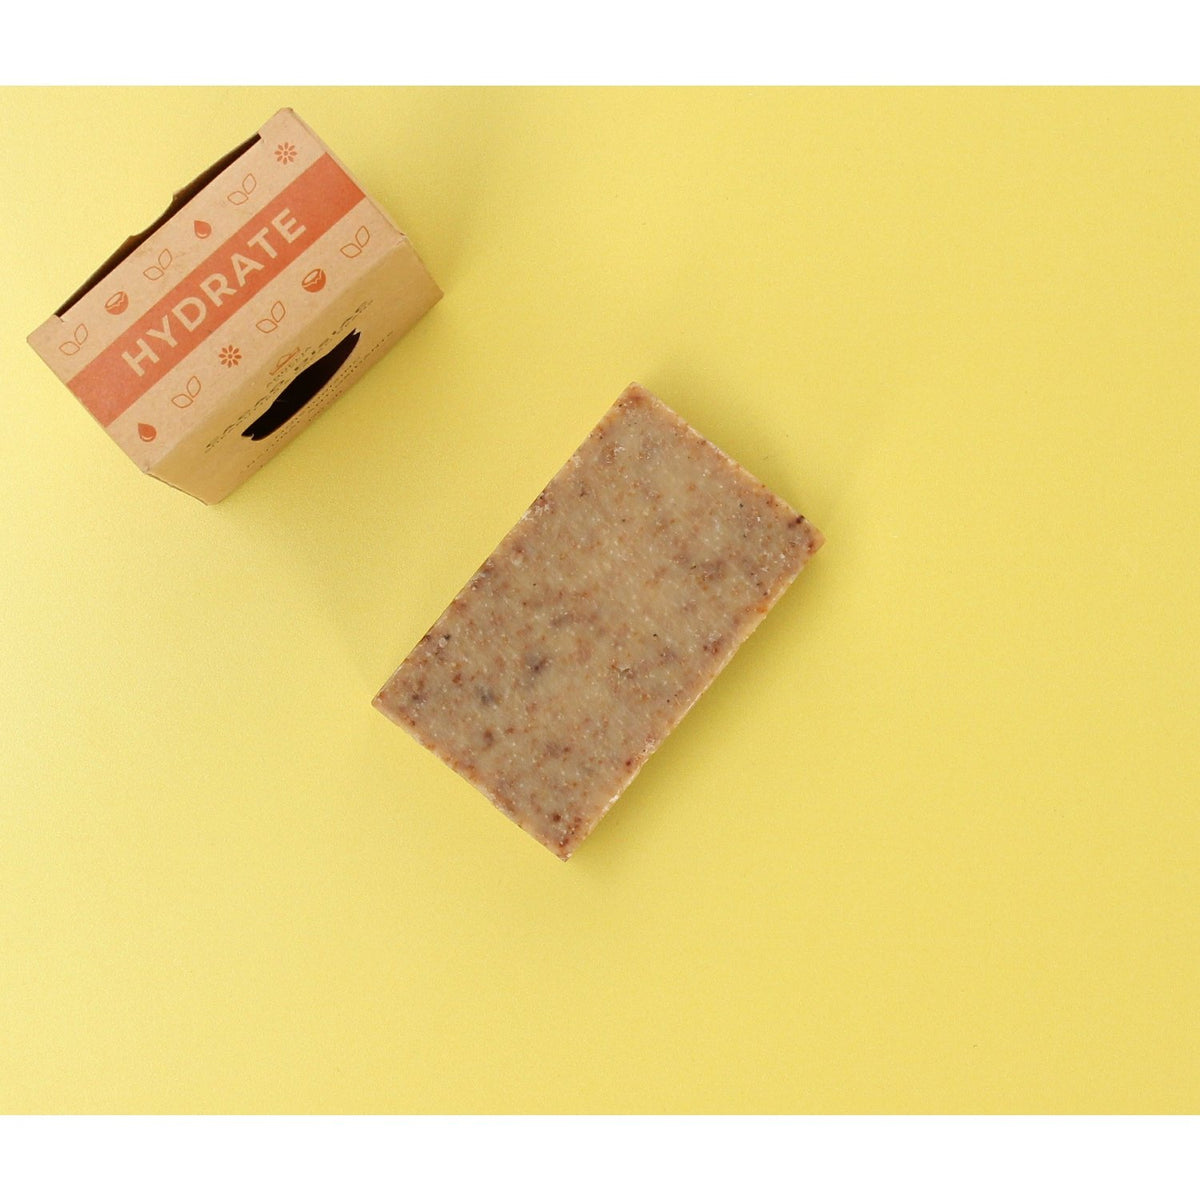 Cacao Disiac natural soap | Skin Hydrate uit de verpakking